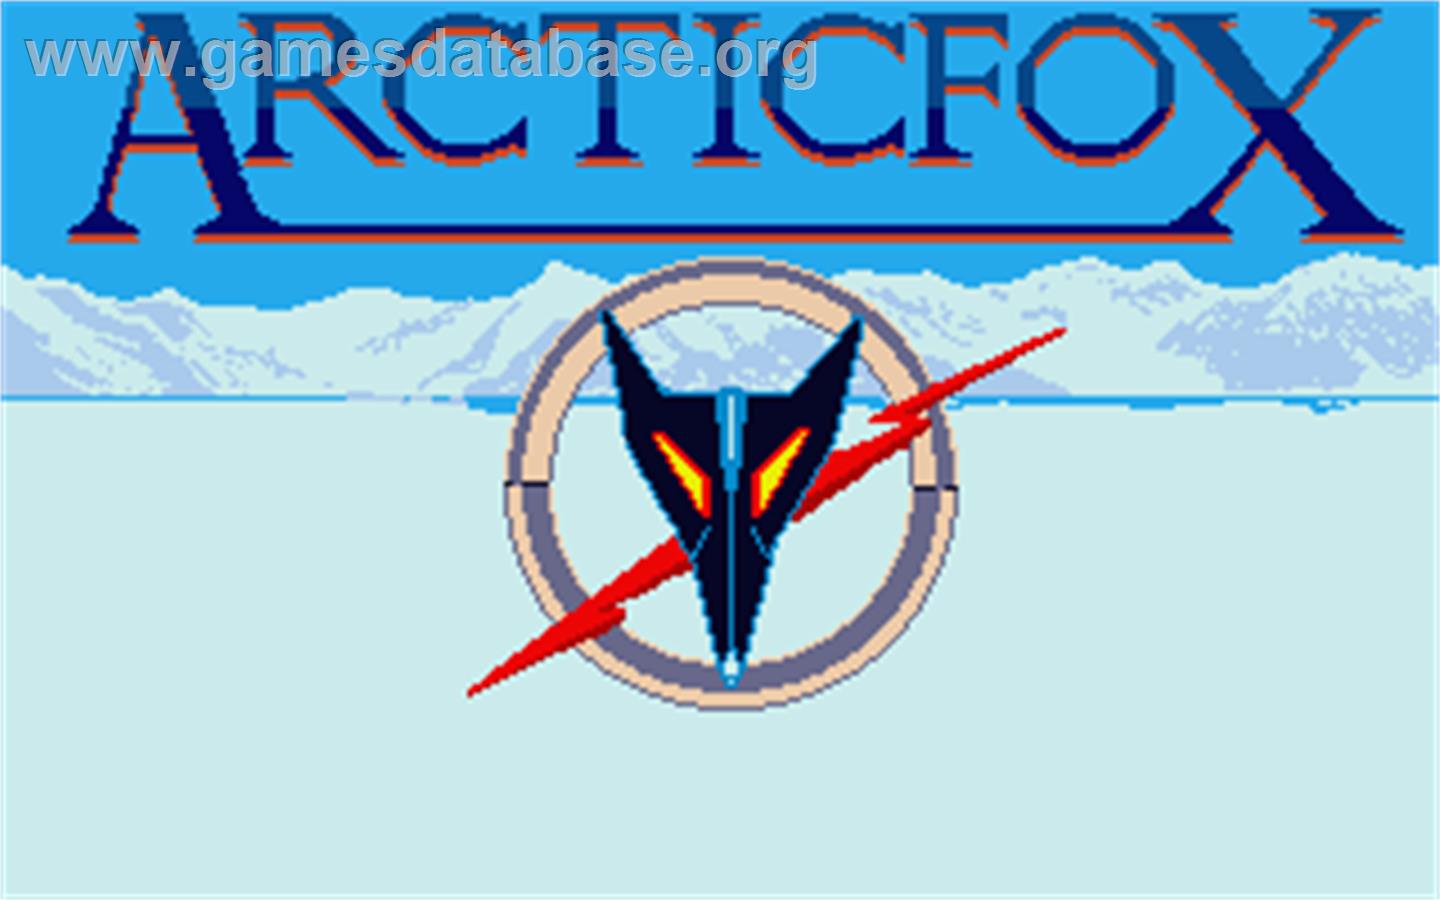 Arcticfox - Atari ST - Artwork - Title Screen